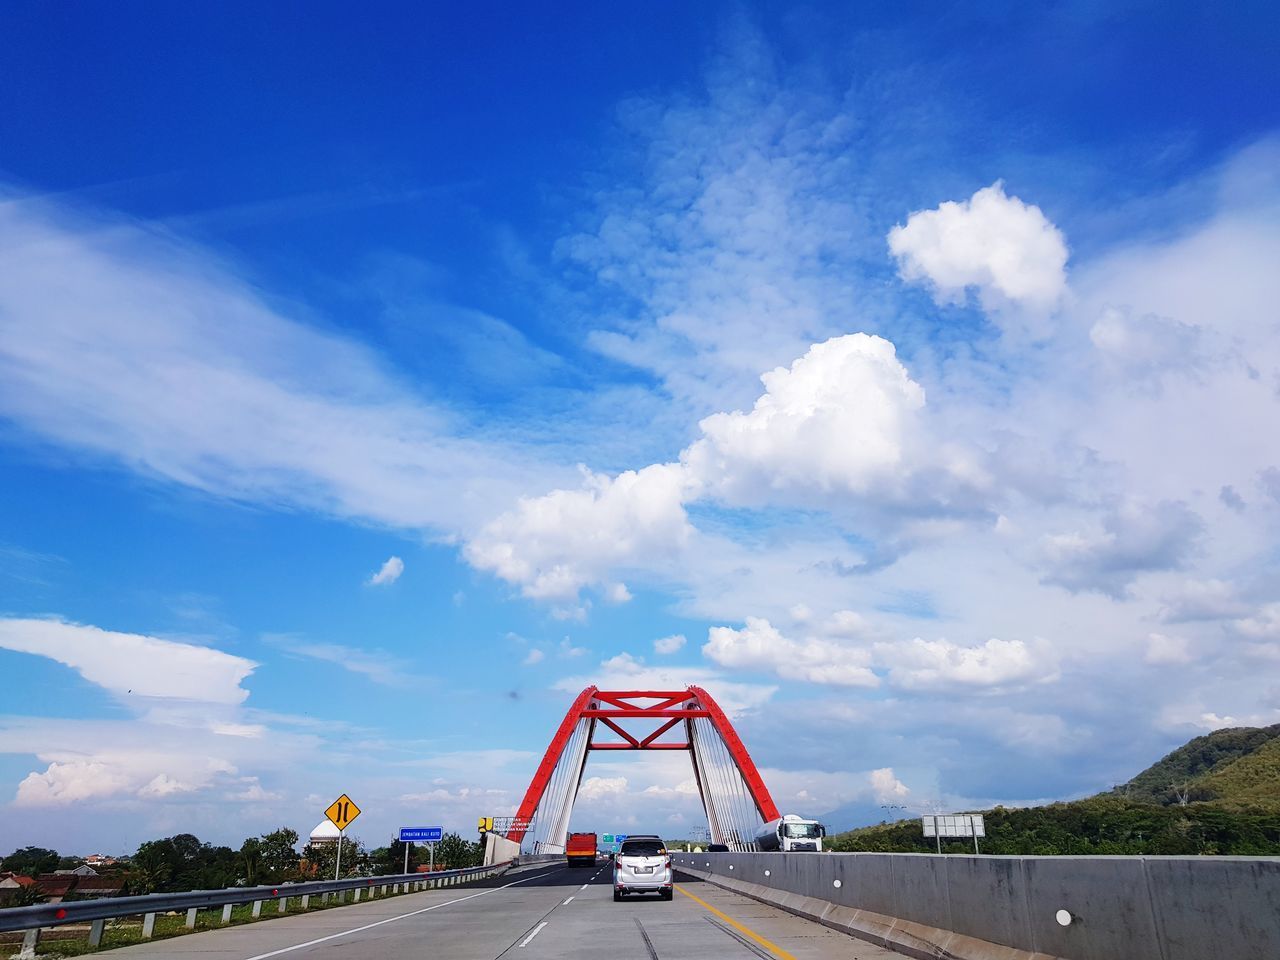 VIEW OF BRIDGE IN CITY AGAINST BLUE SKY